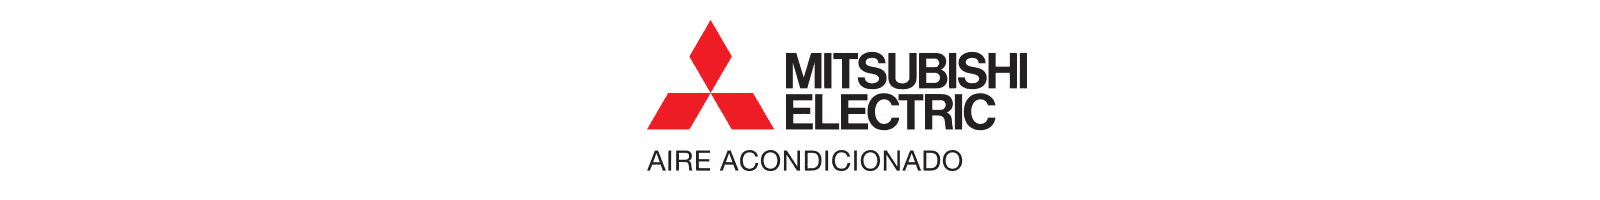 logo-grande-mitsubishi-electric